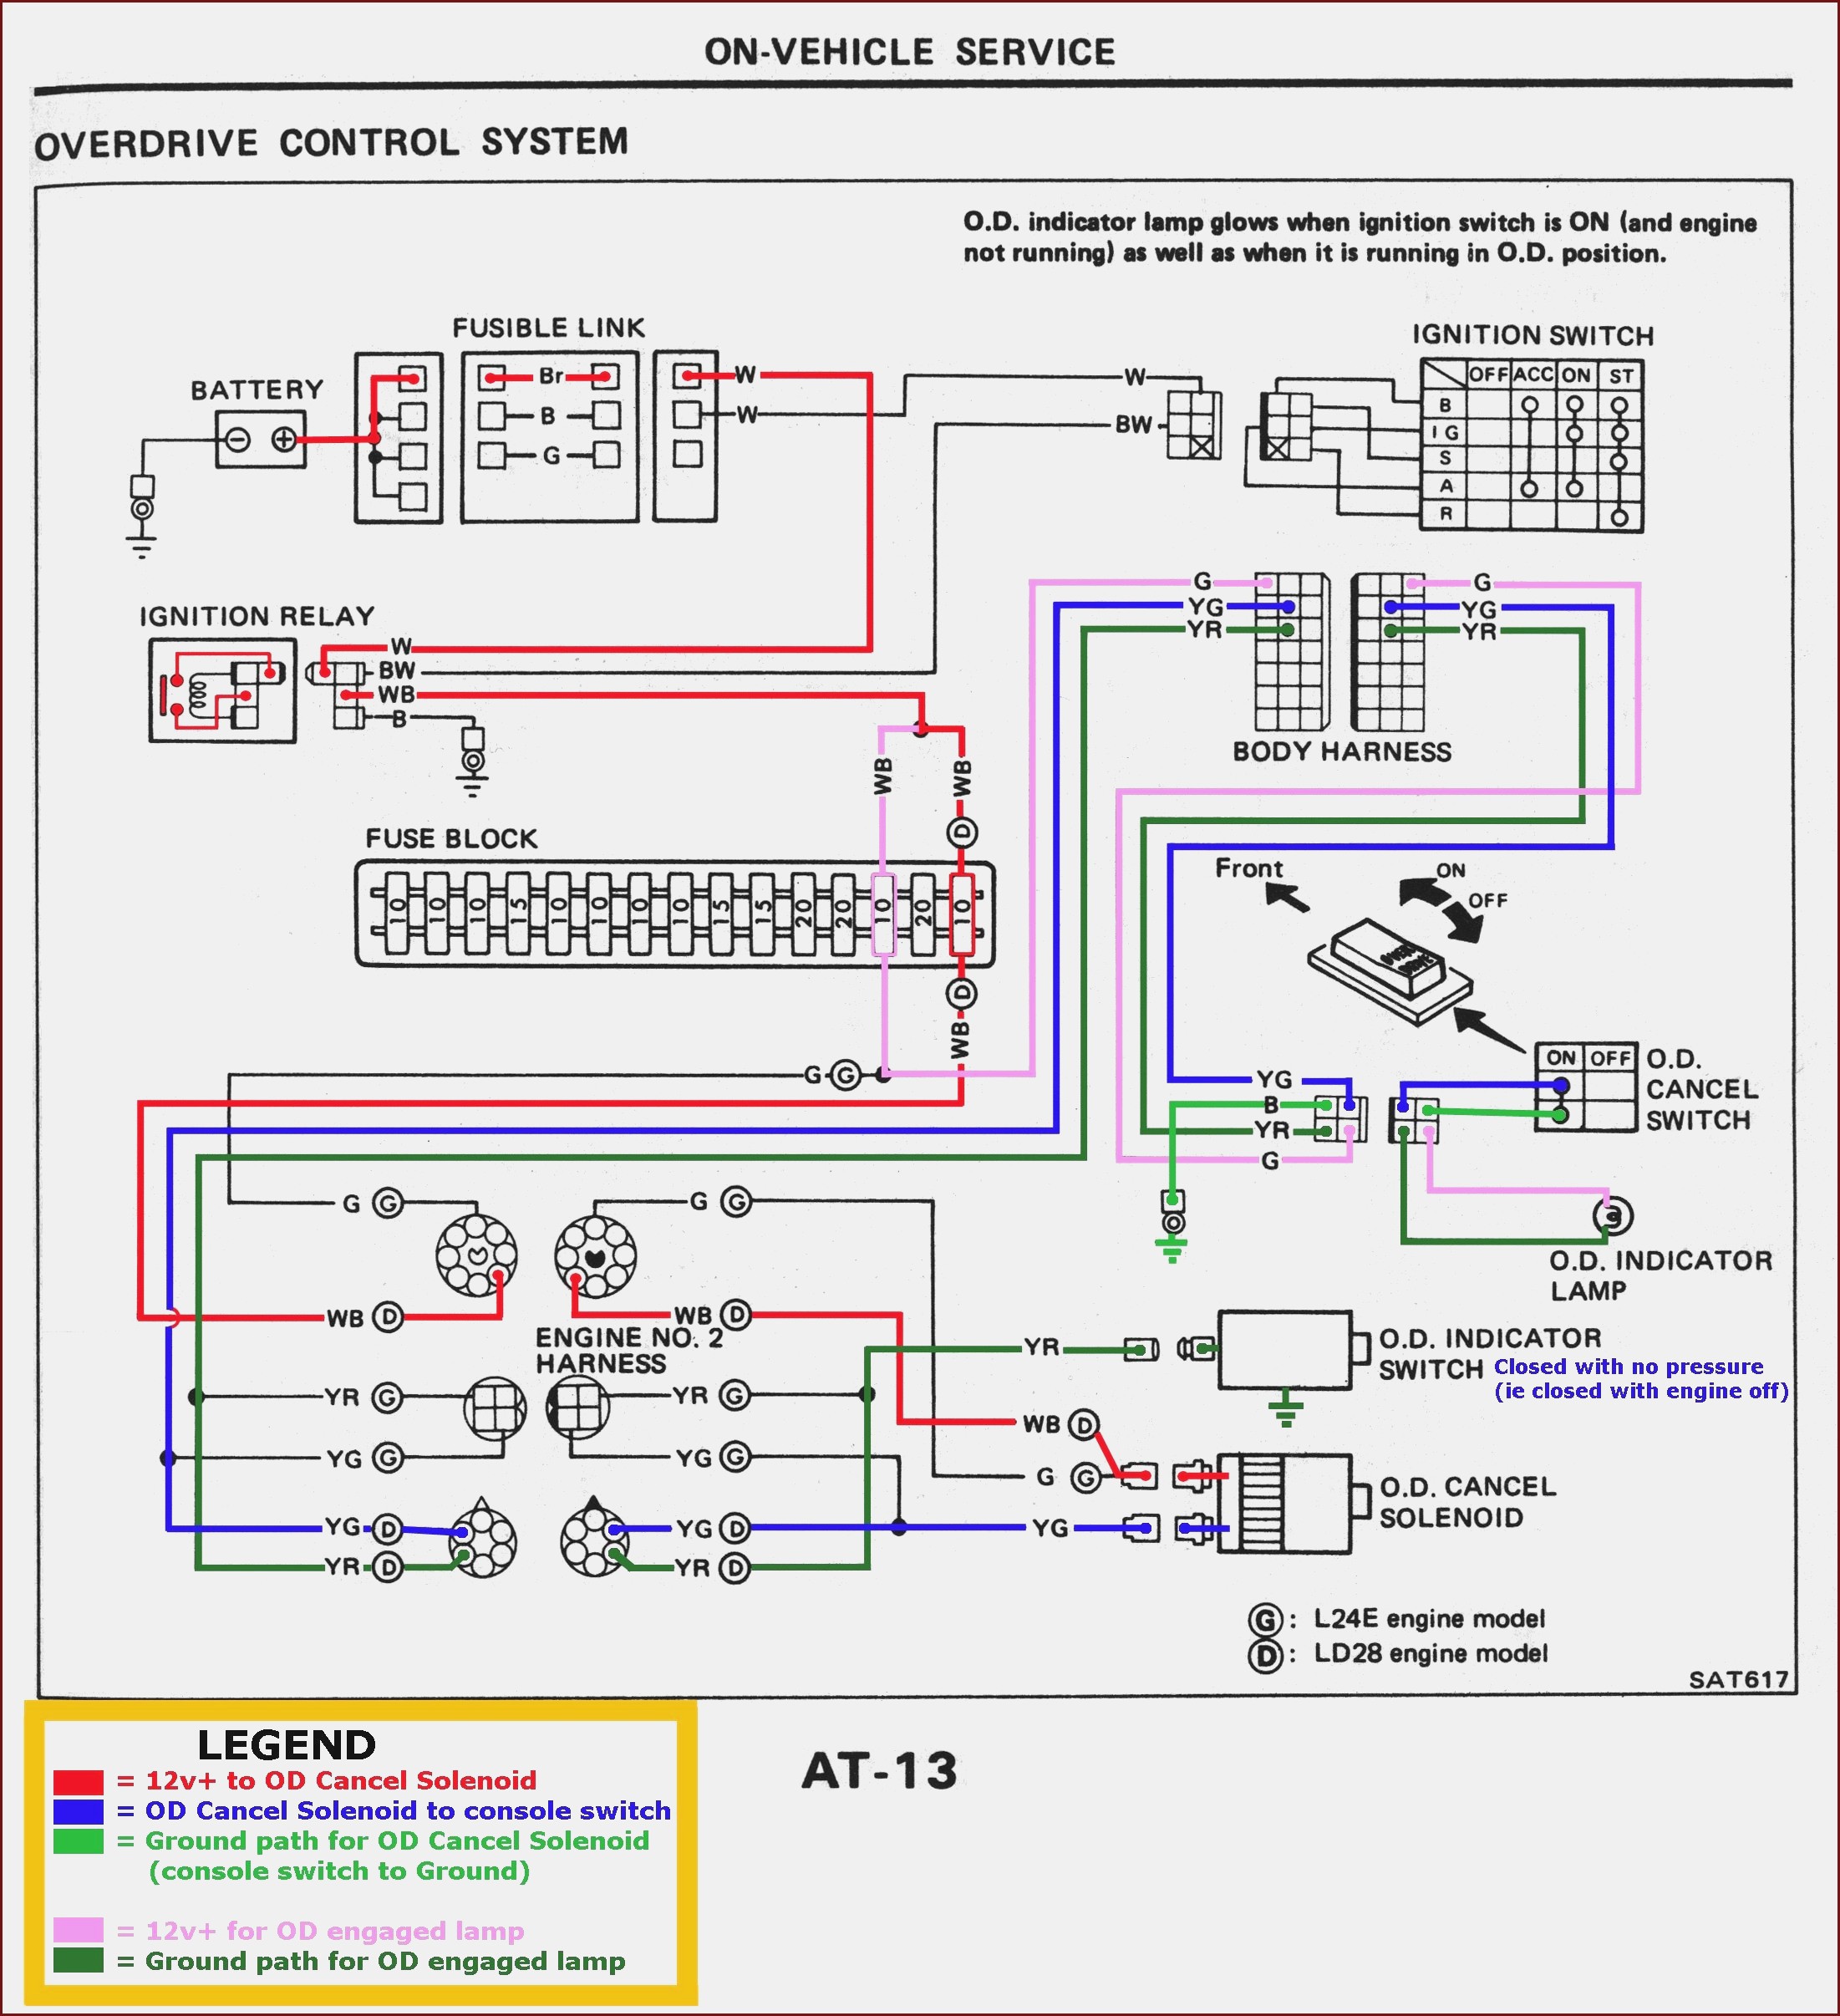 Honda Gx160 Engine Diagram 94a37 Honda Hobbit Wiring Diagram Of Honda Gx160 Engine Diagram